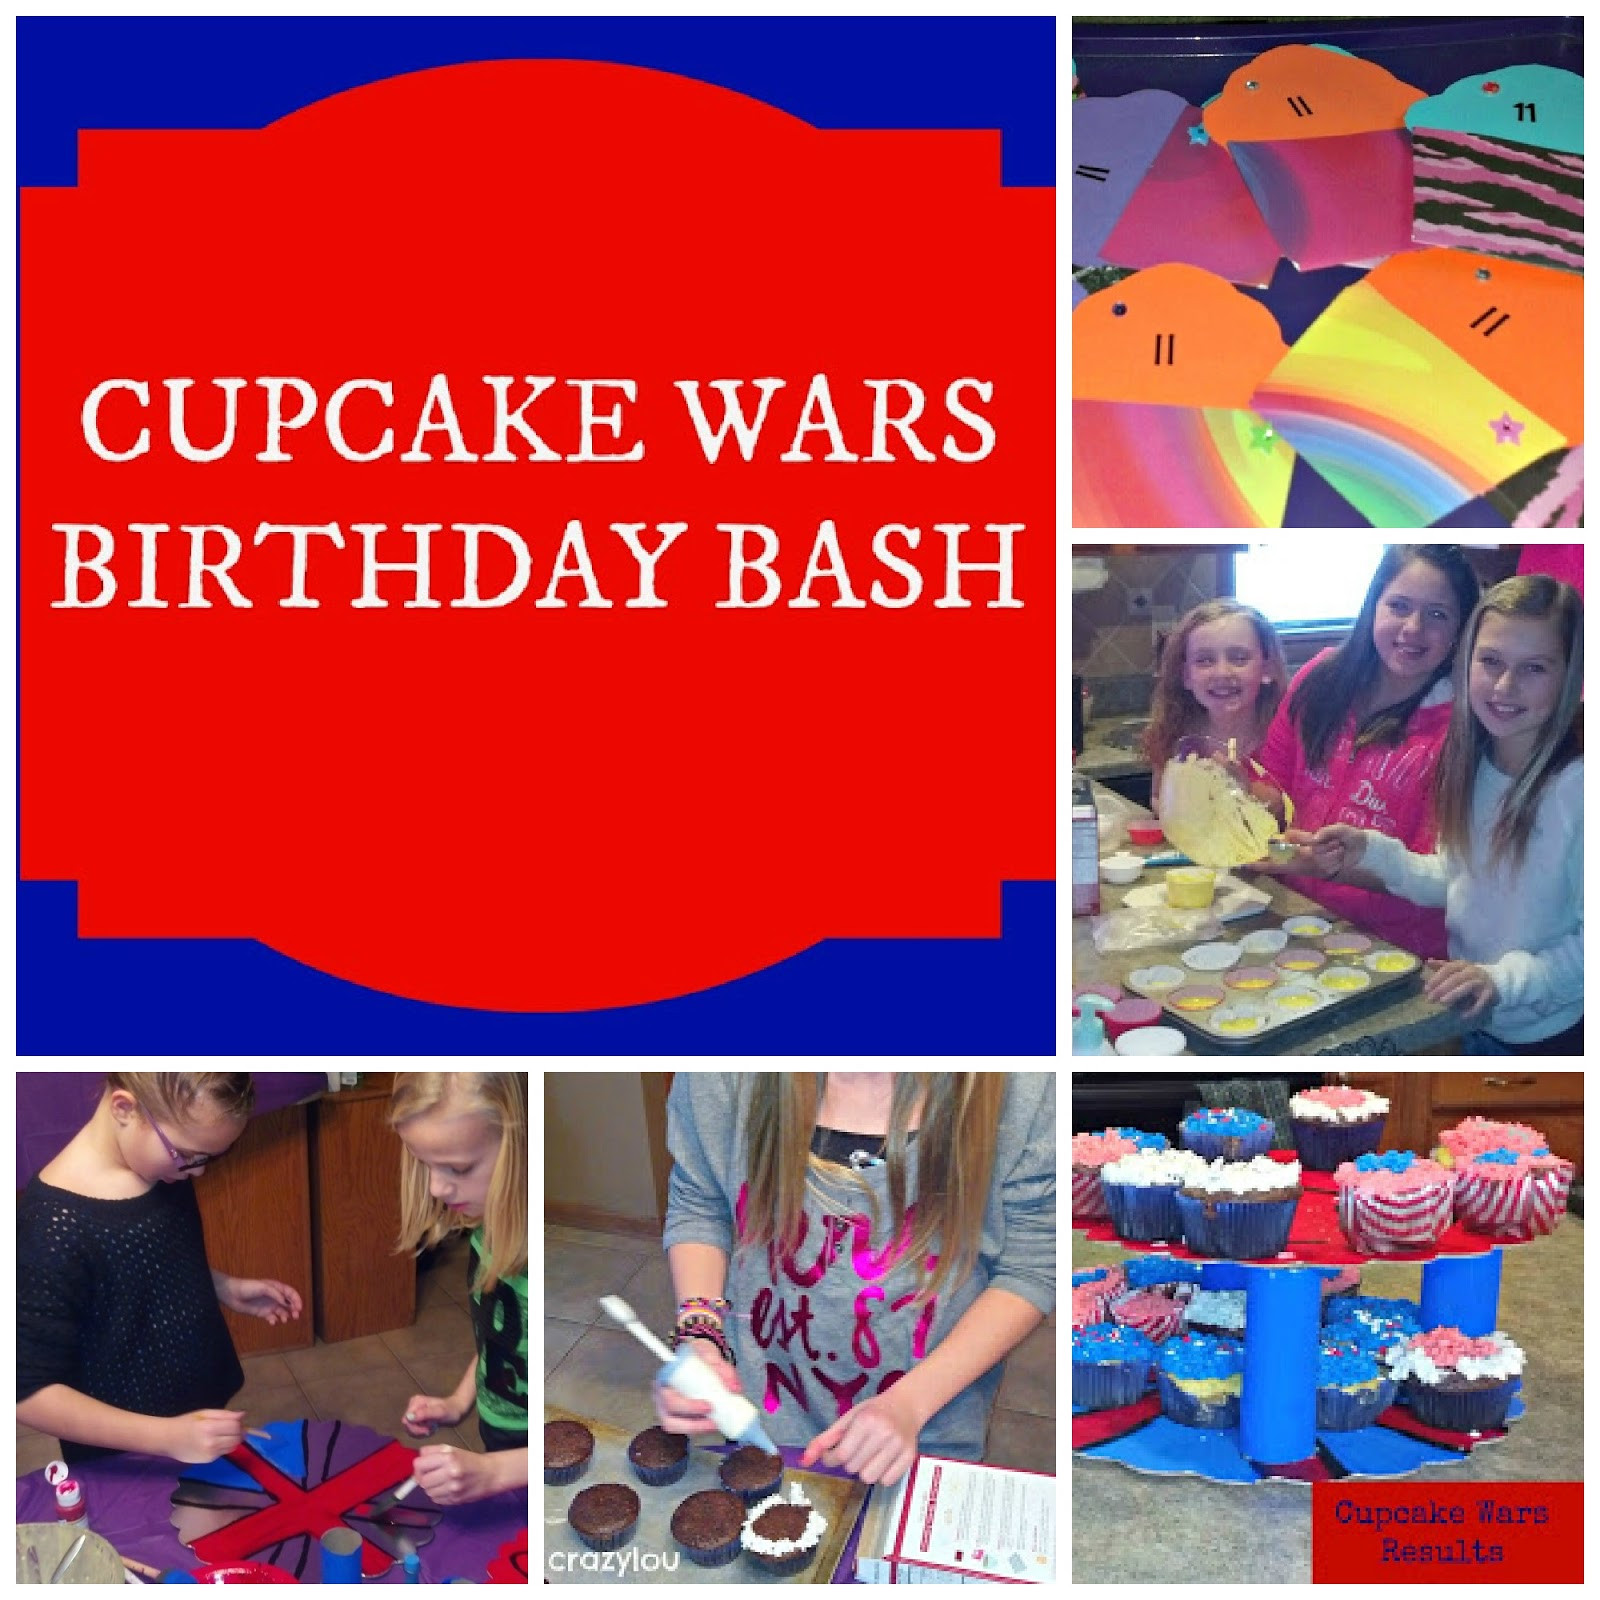 Cupcake Wars Birthday Party
 crazylou Cupcake Wars Birthday Bash